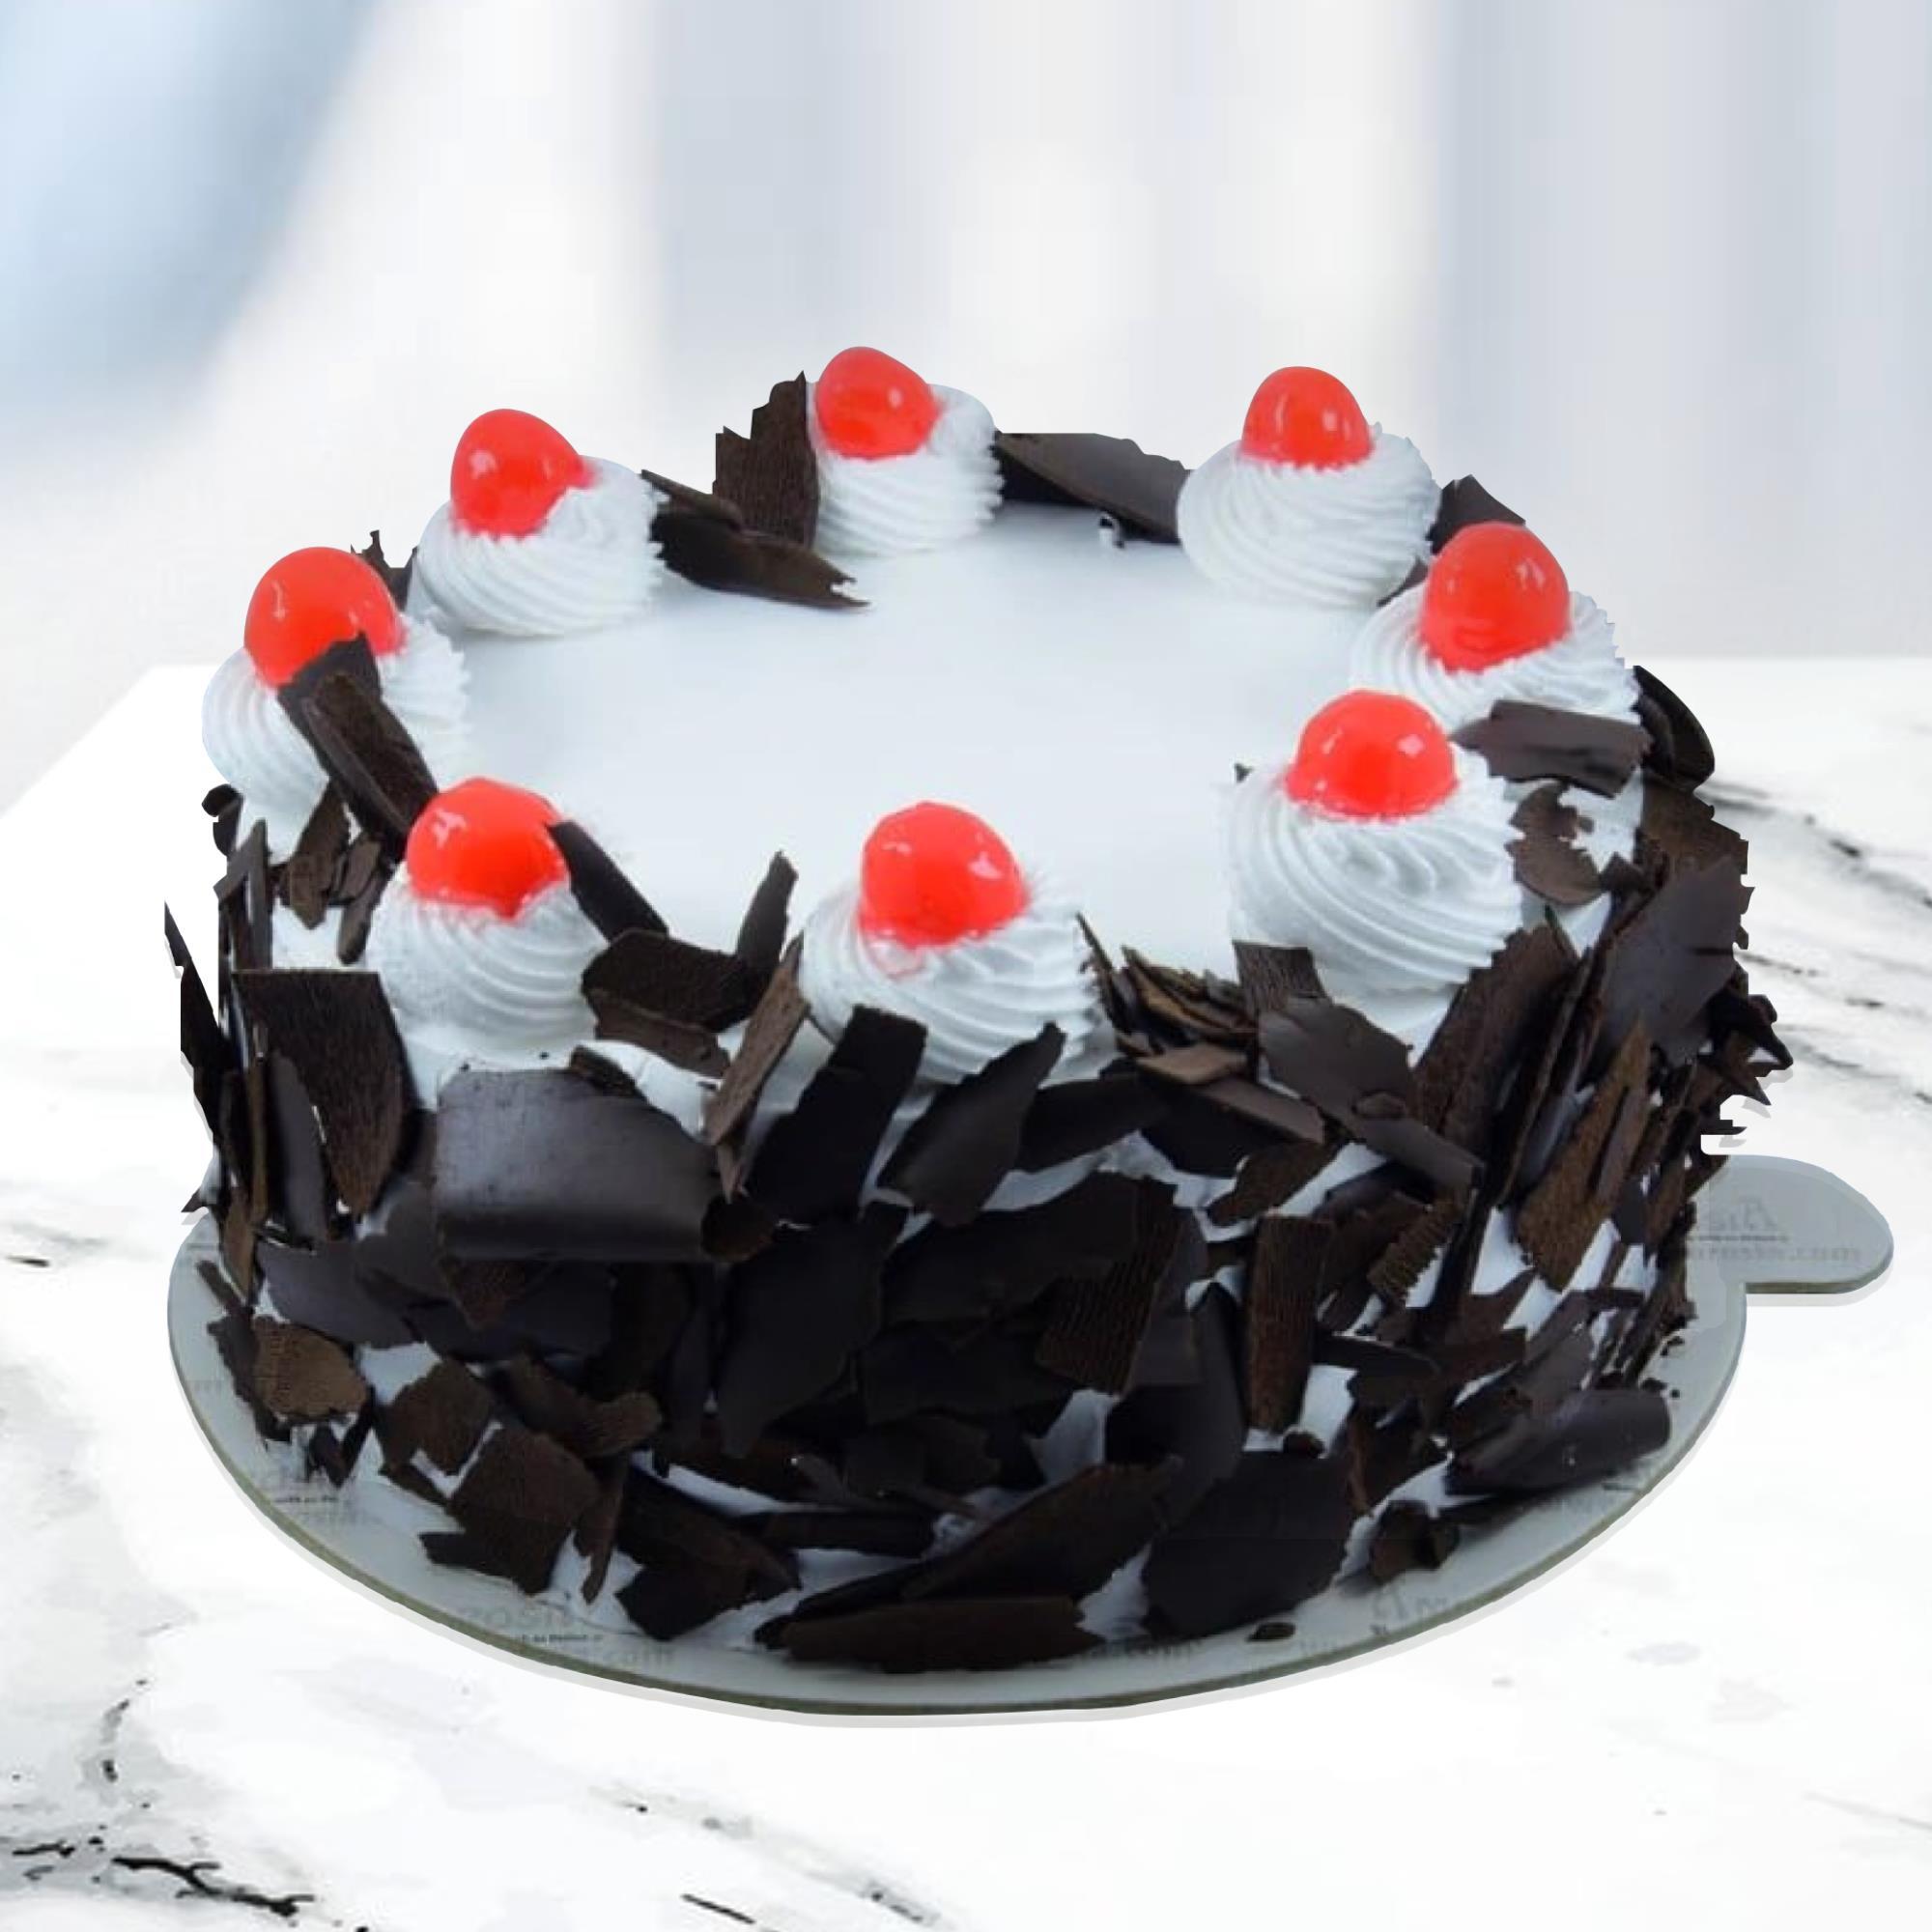 Buy Cake Online in Bangalore | Birthday cake delivery, Online cake delivery,  Cake delivery